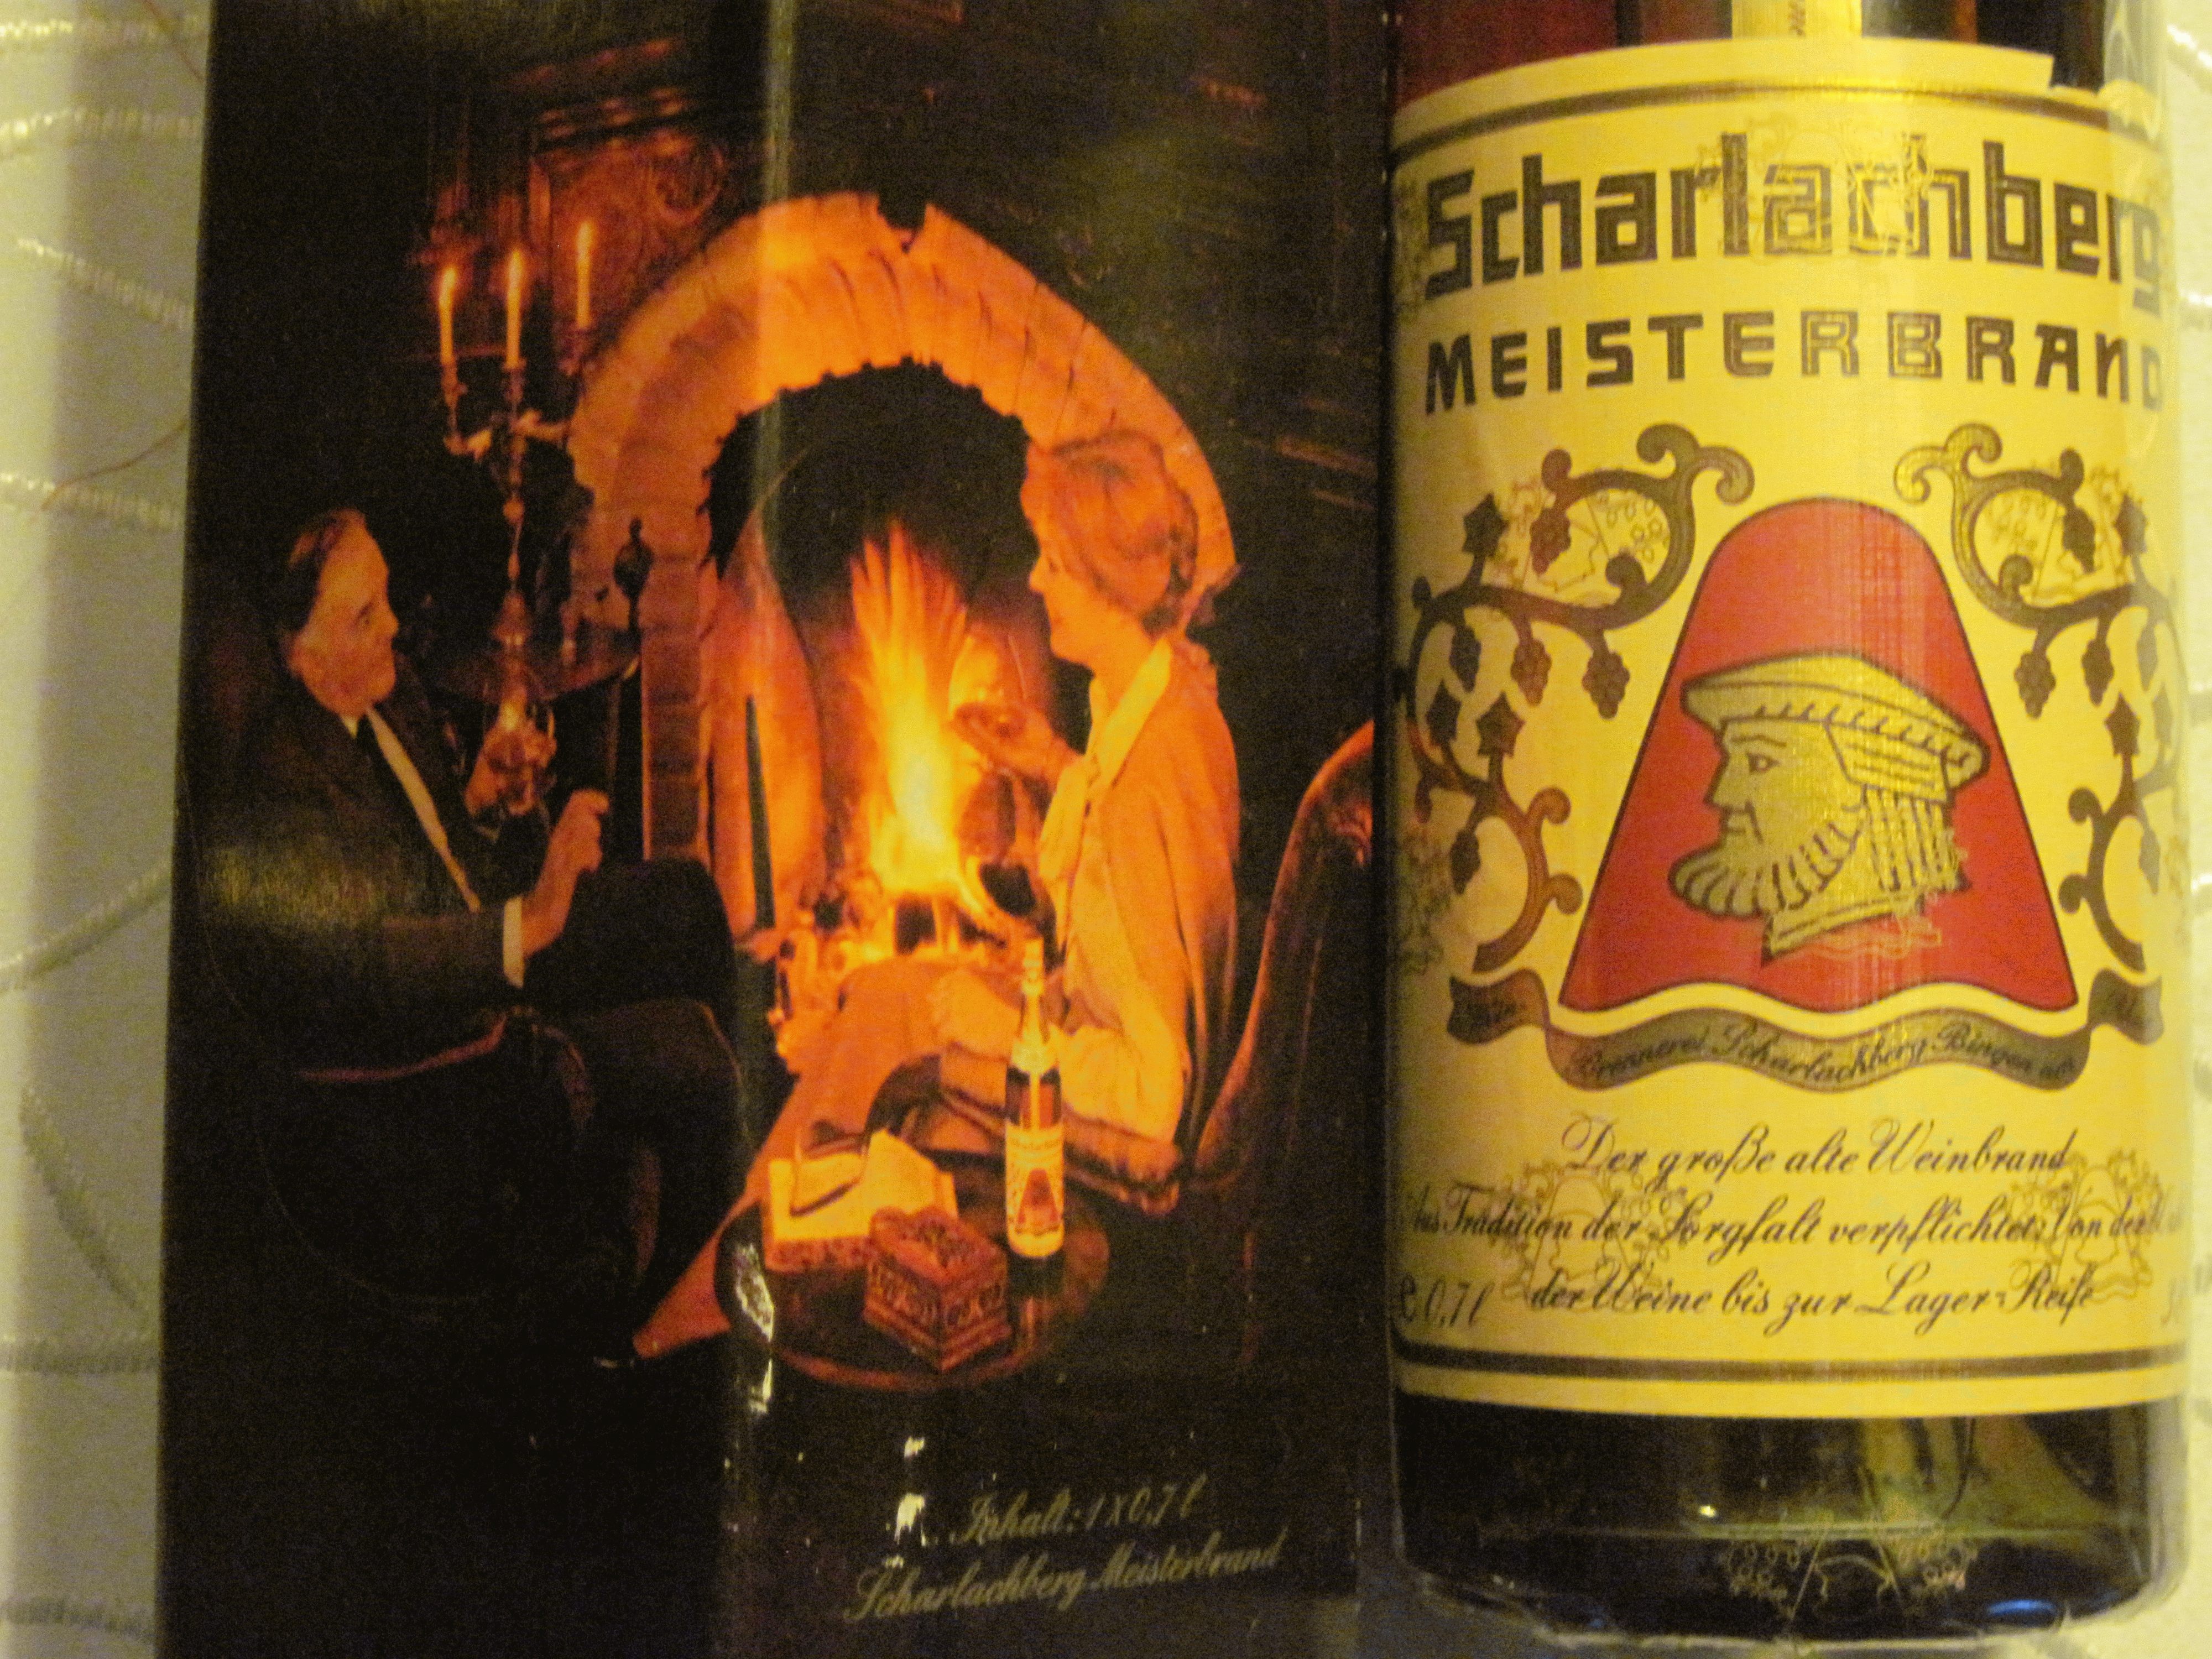 Scharlachberg Meisterbrand